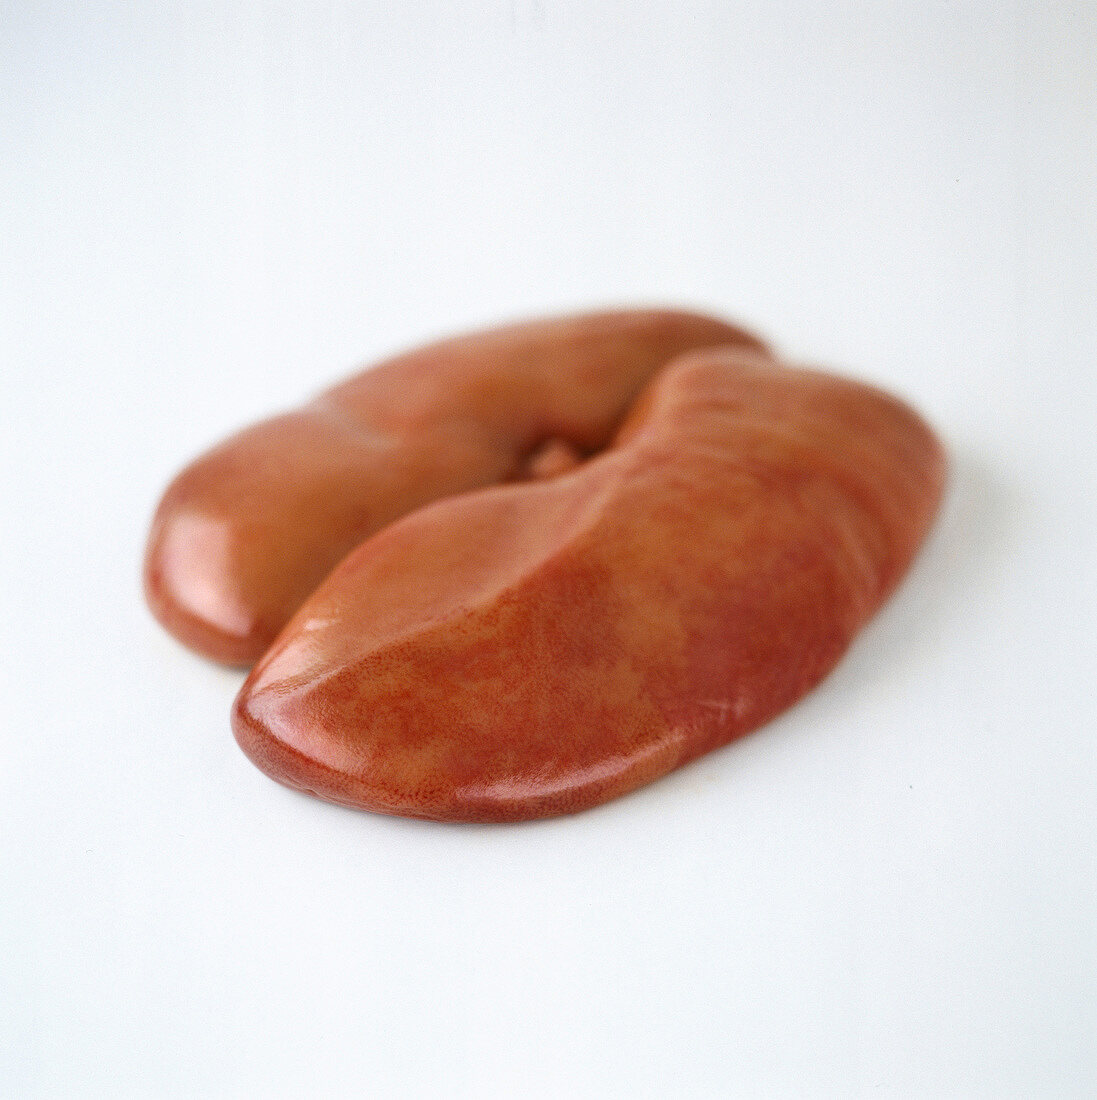 Raw pork kidneys